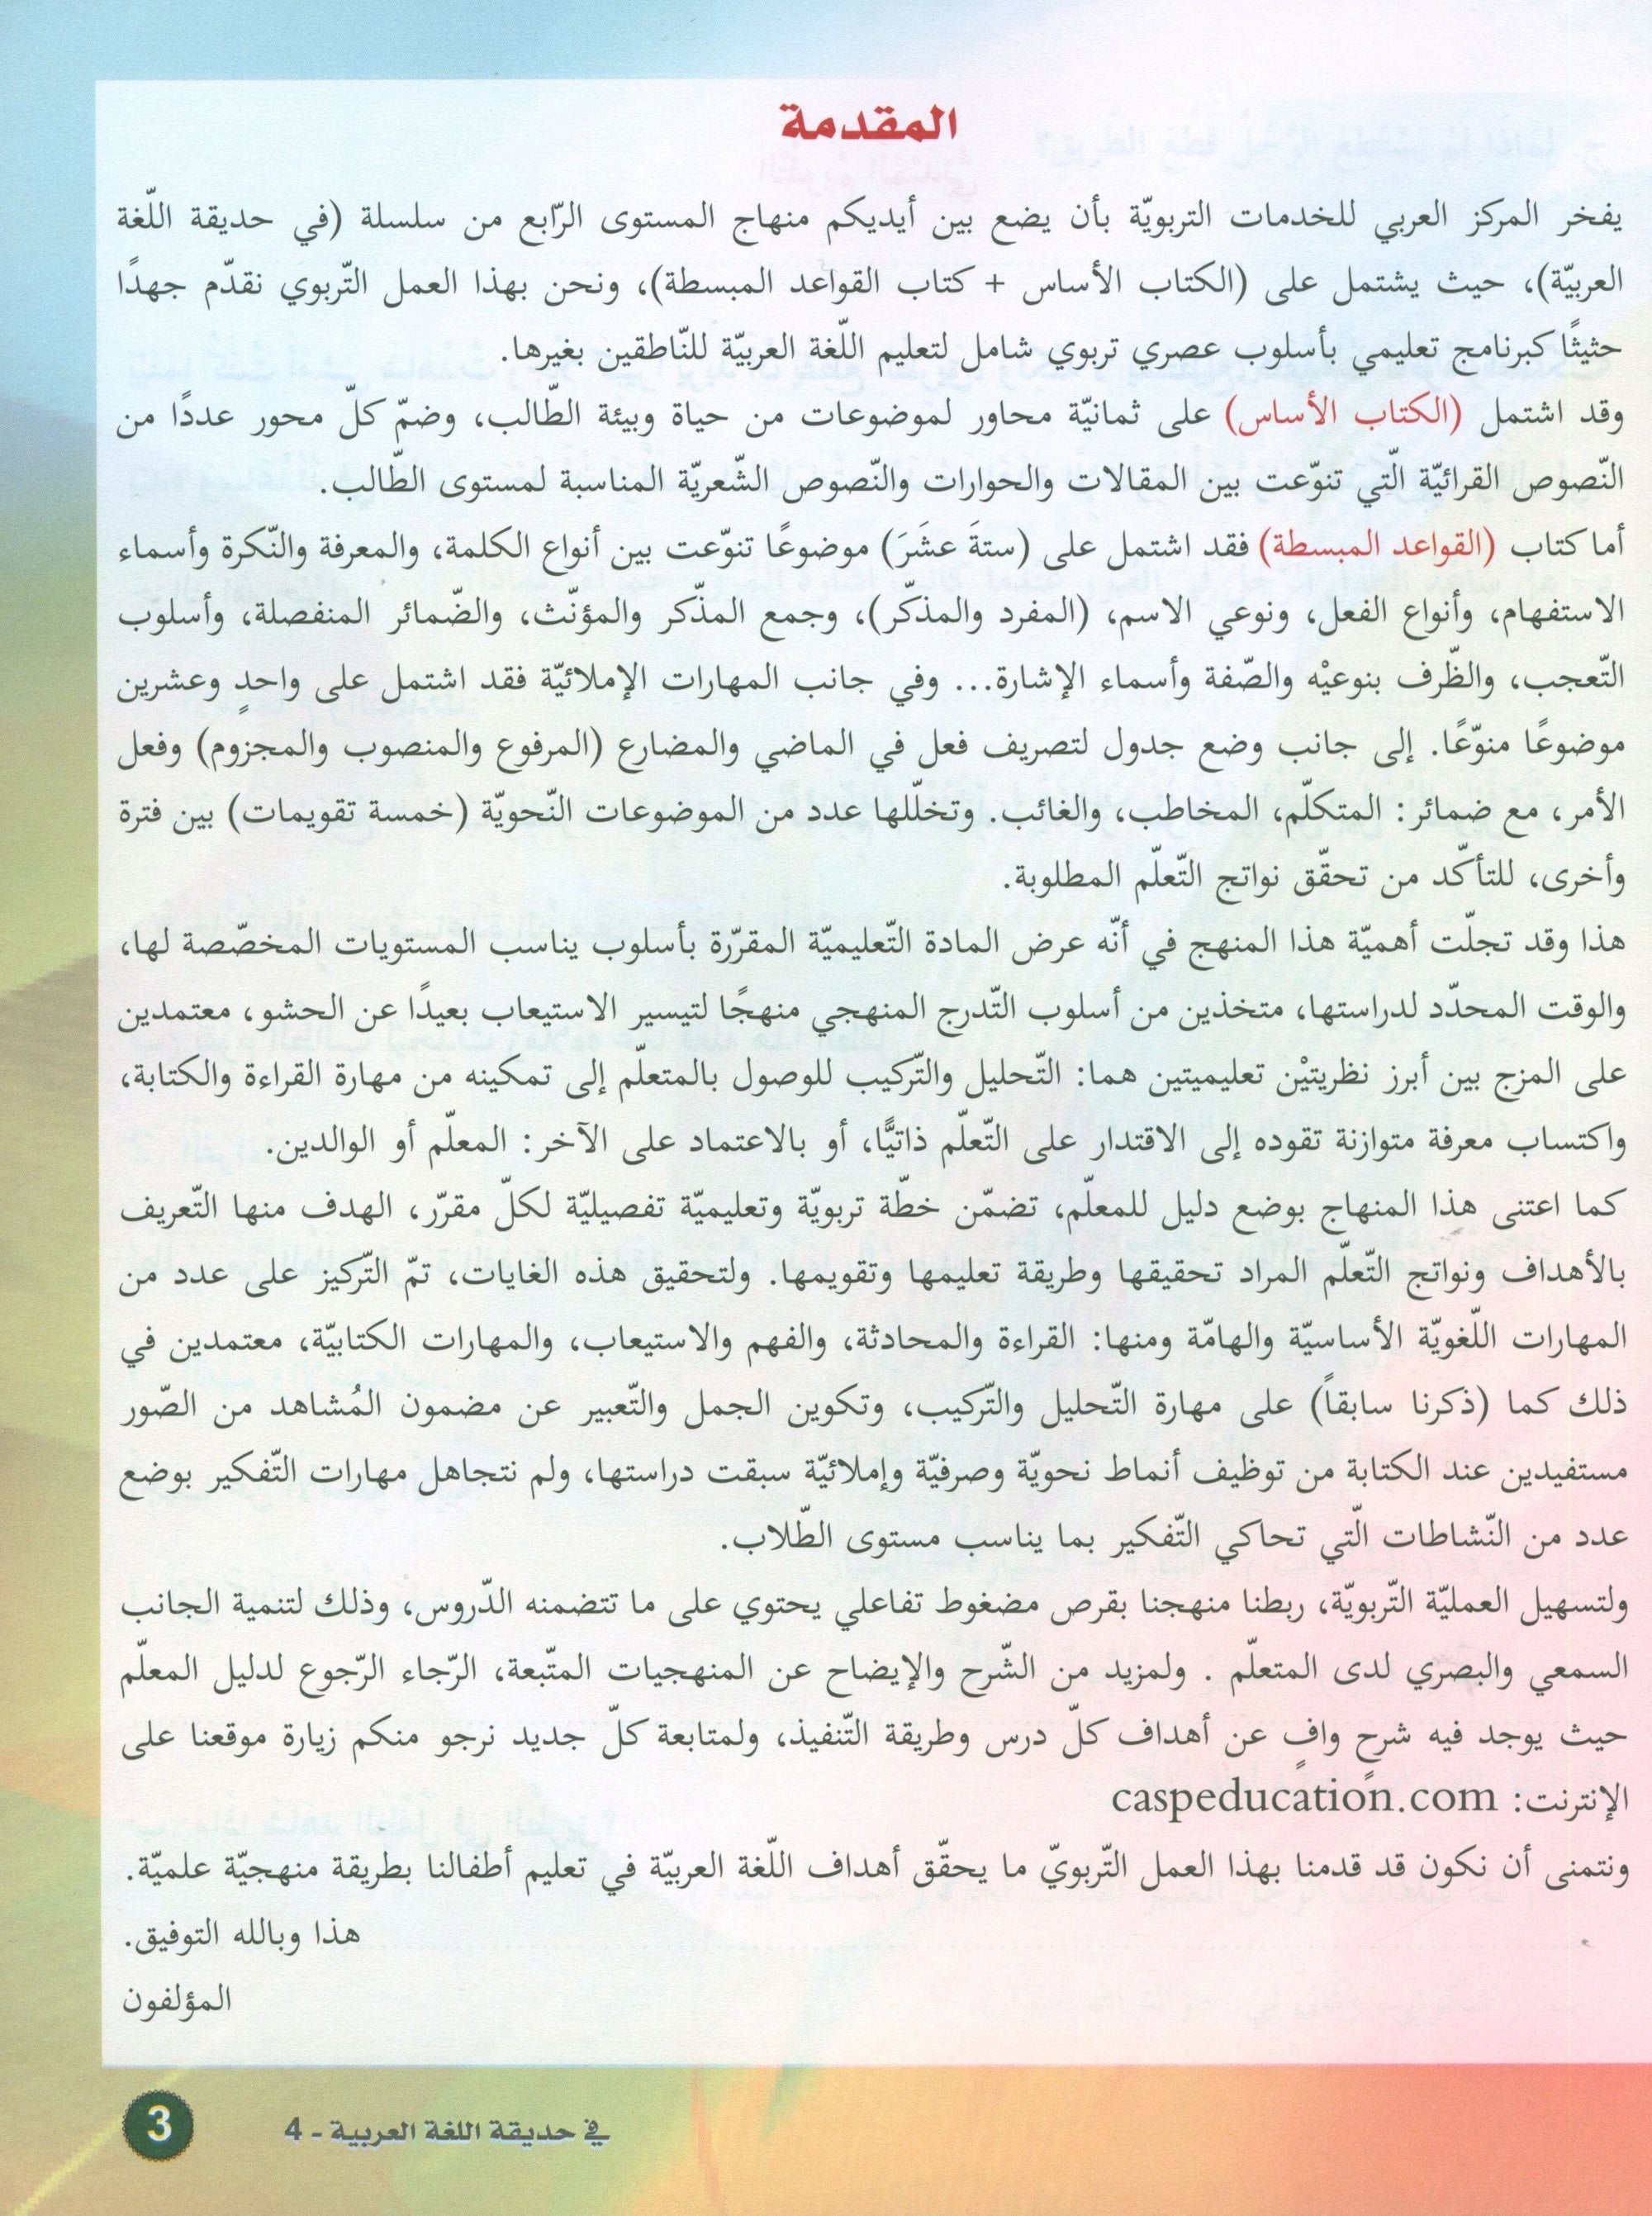 In the Arabic Garden Textbook Level 4 في حديقة اللغة العربية